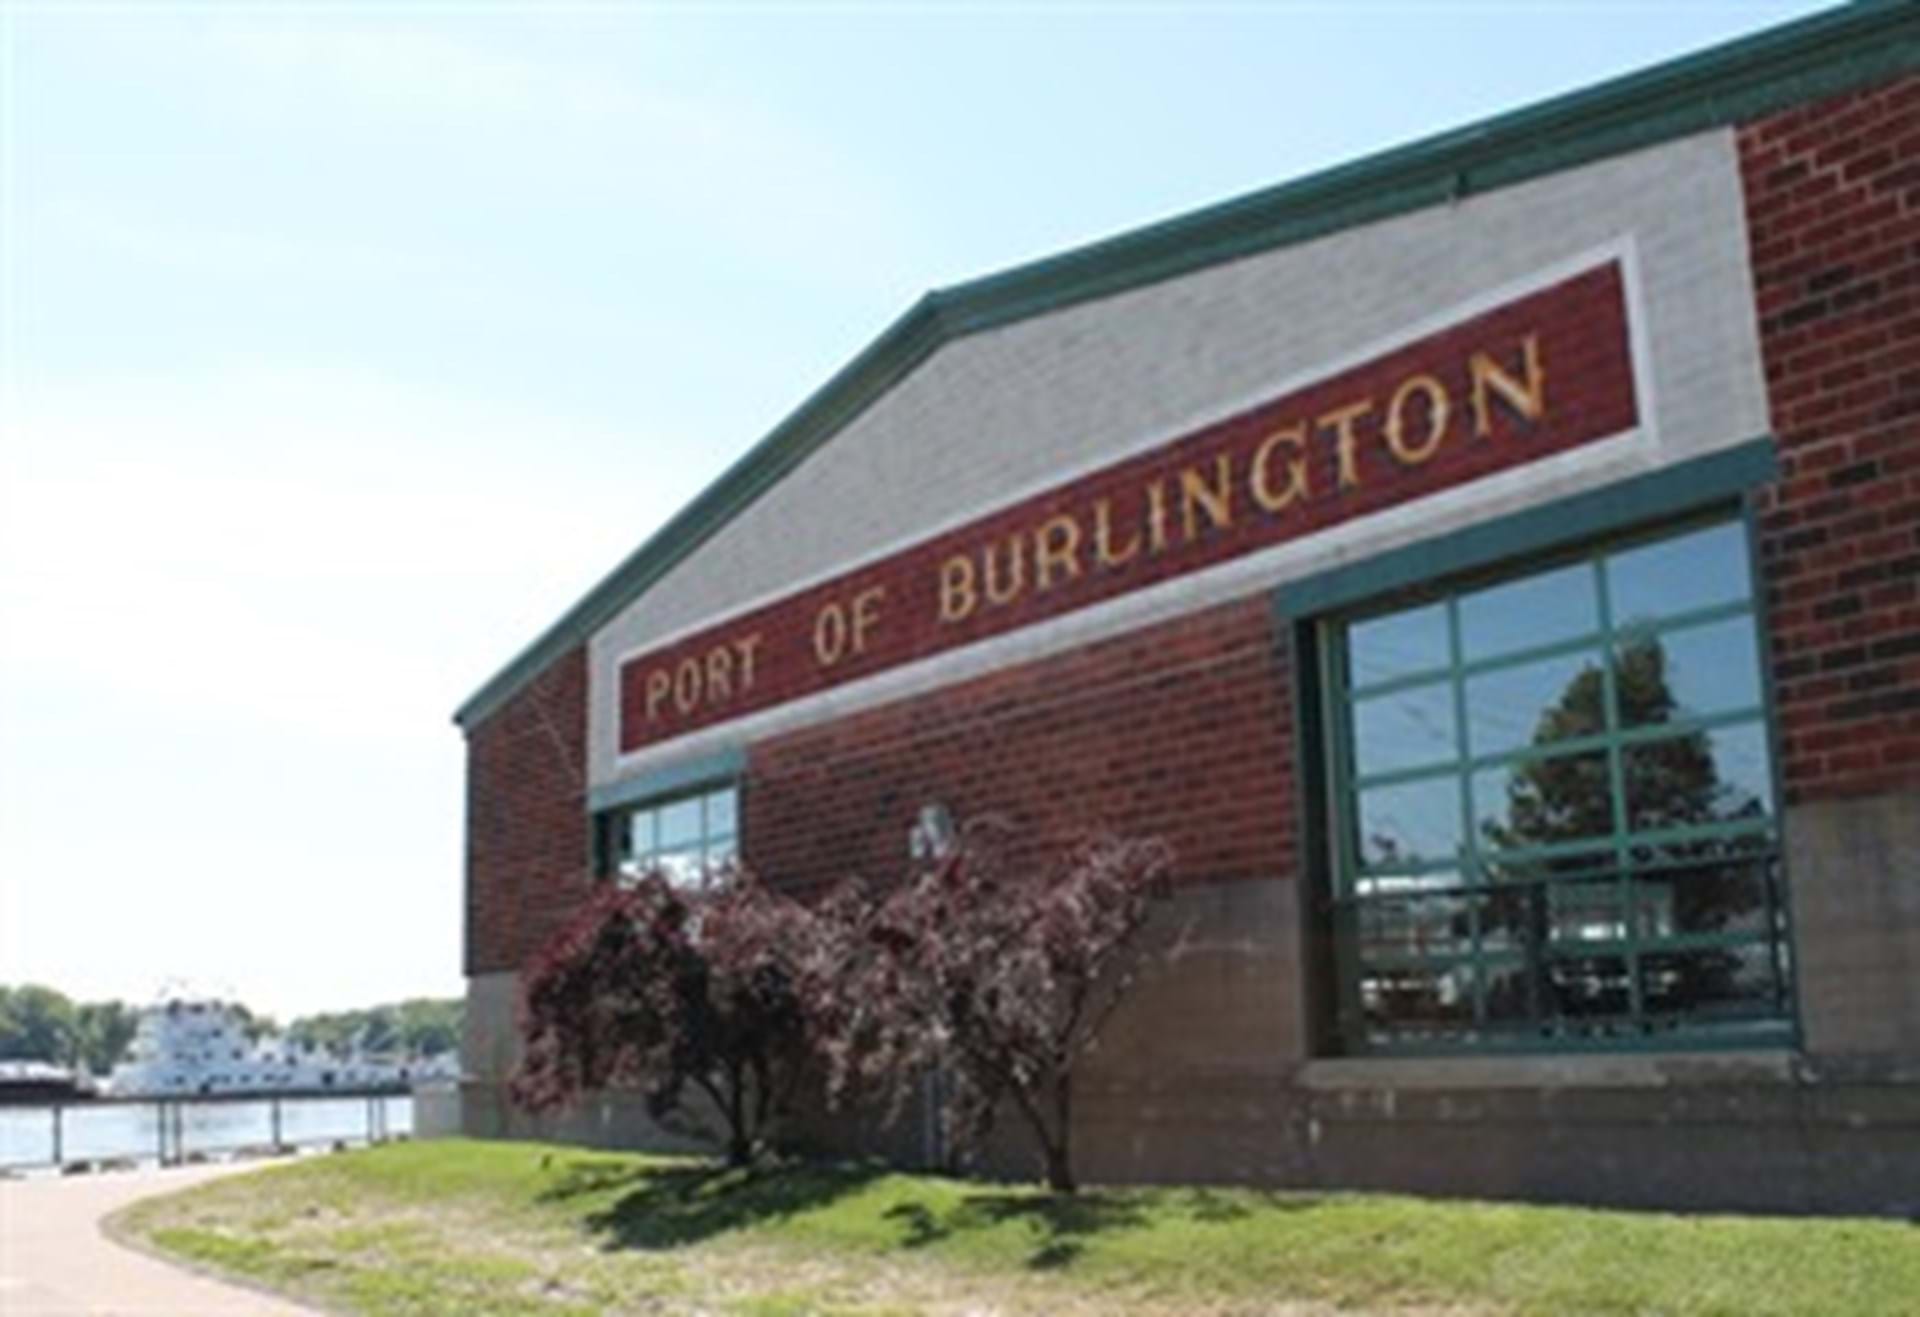 Port of Burlington Welcome Center